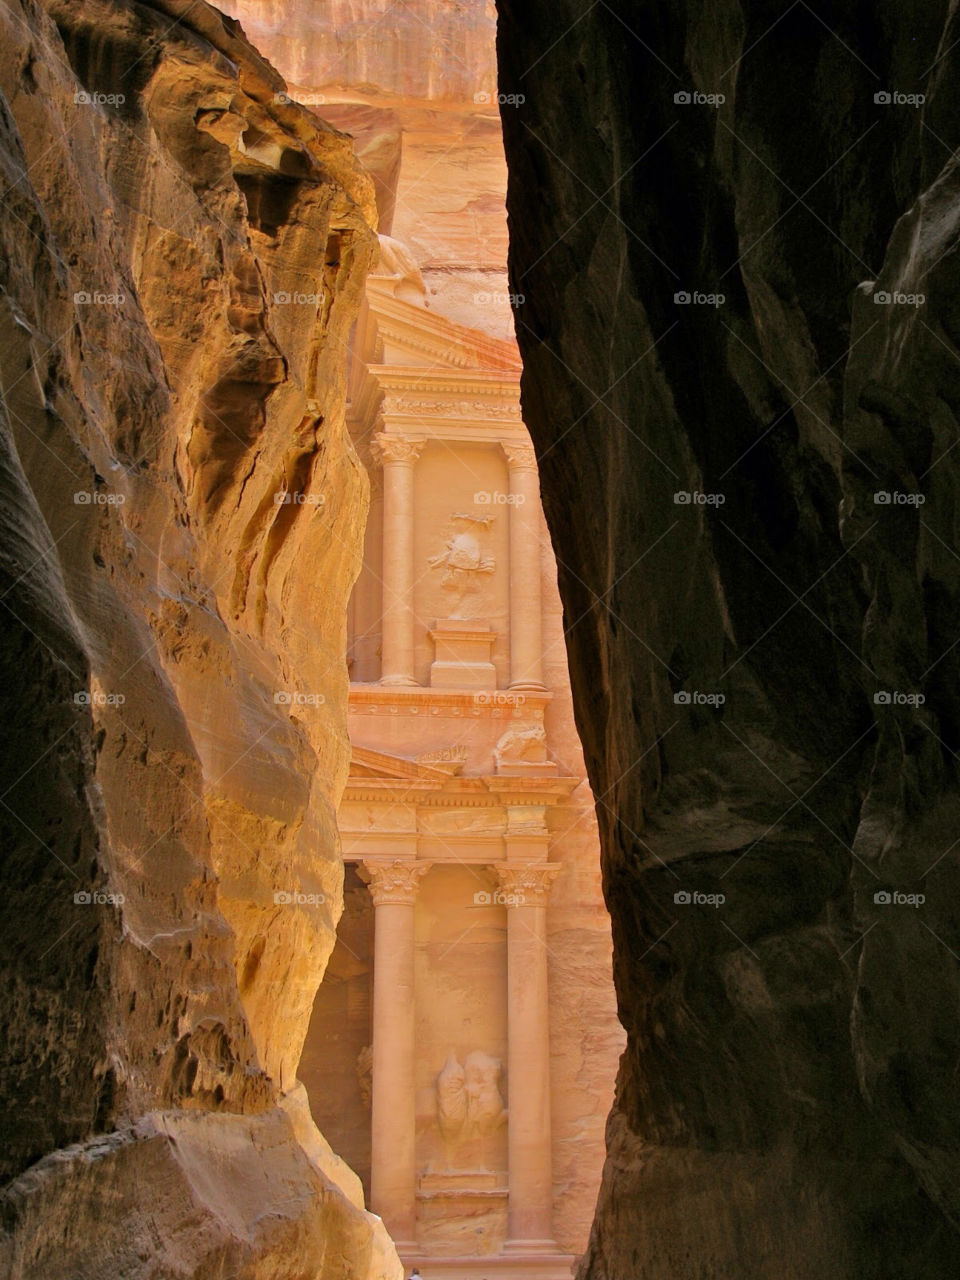 The Siq, main entrance to the ancient city of Petra, Jordan